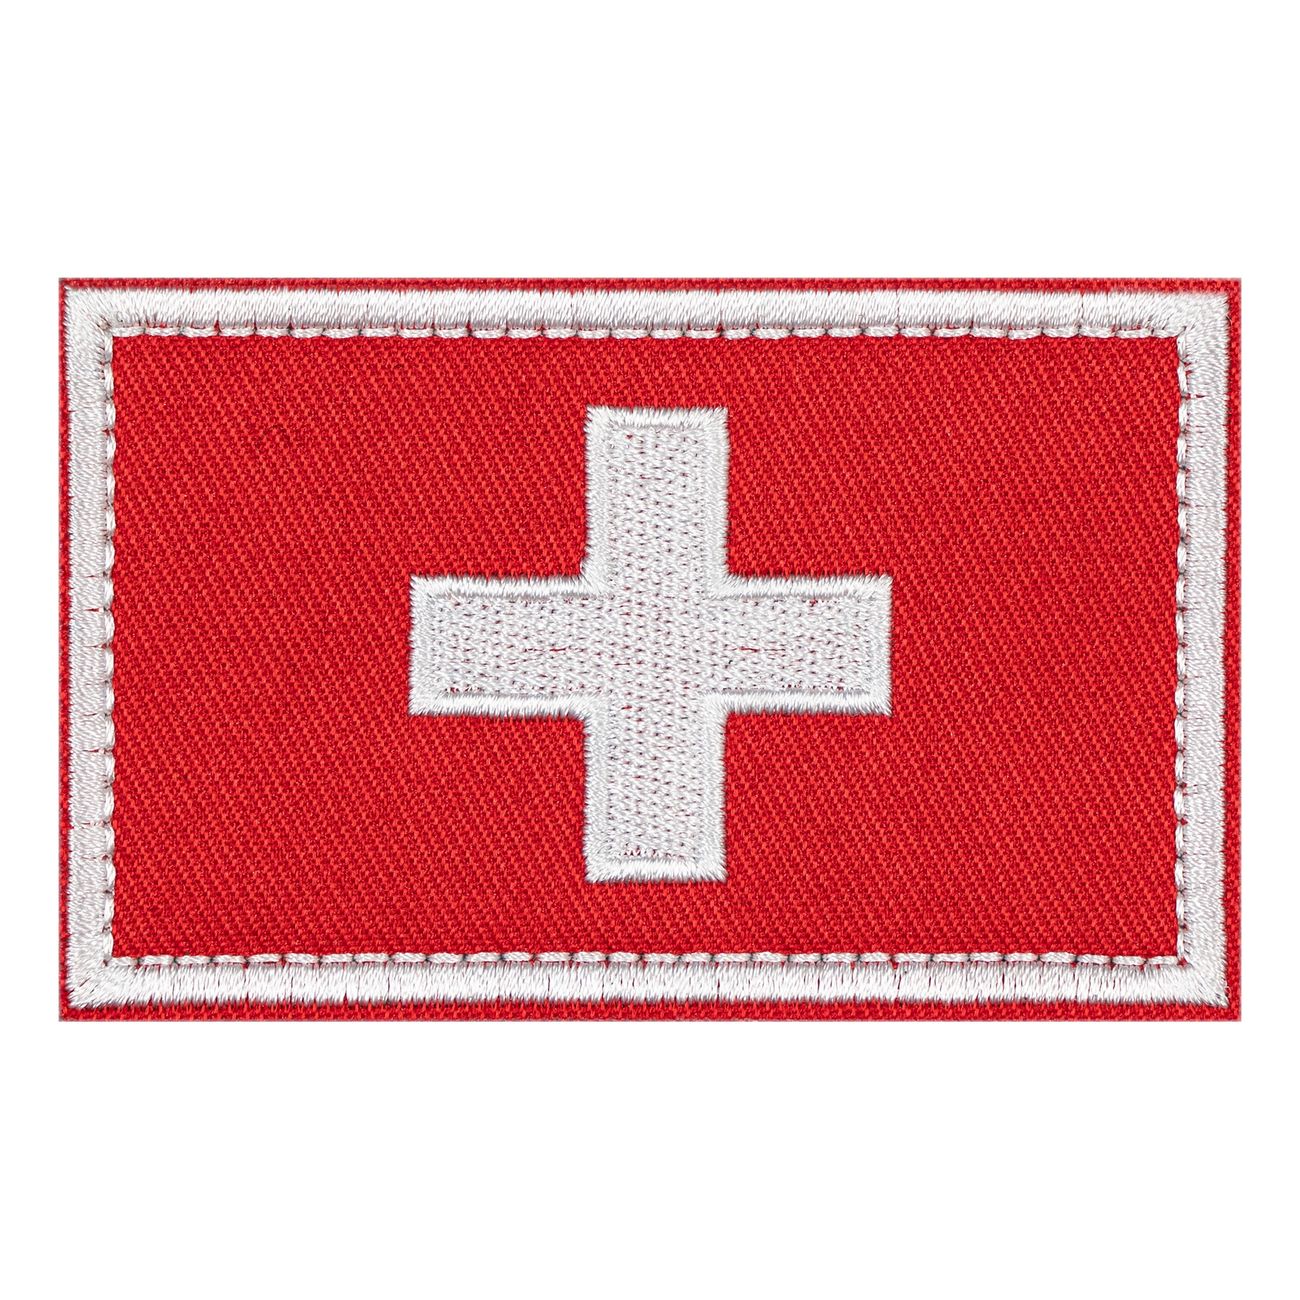 tygmarke-schweiziska-flaggan-92026-1